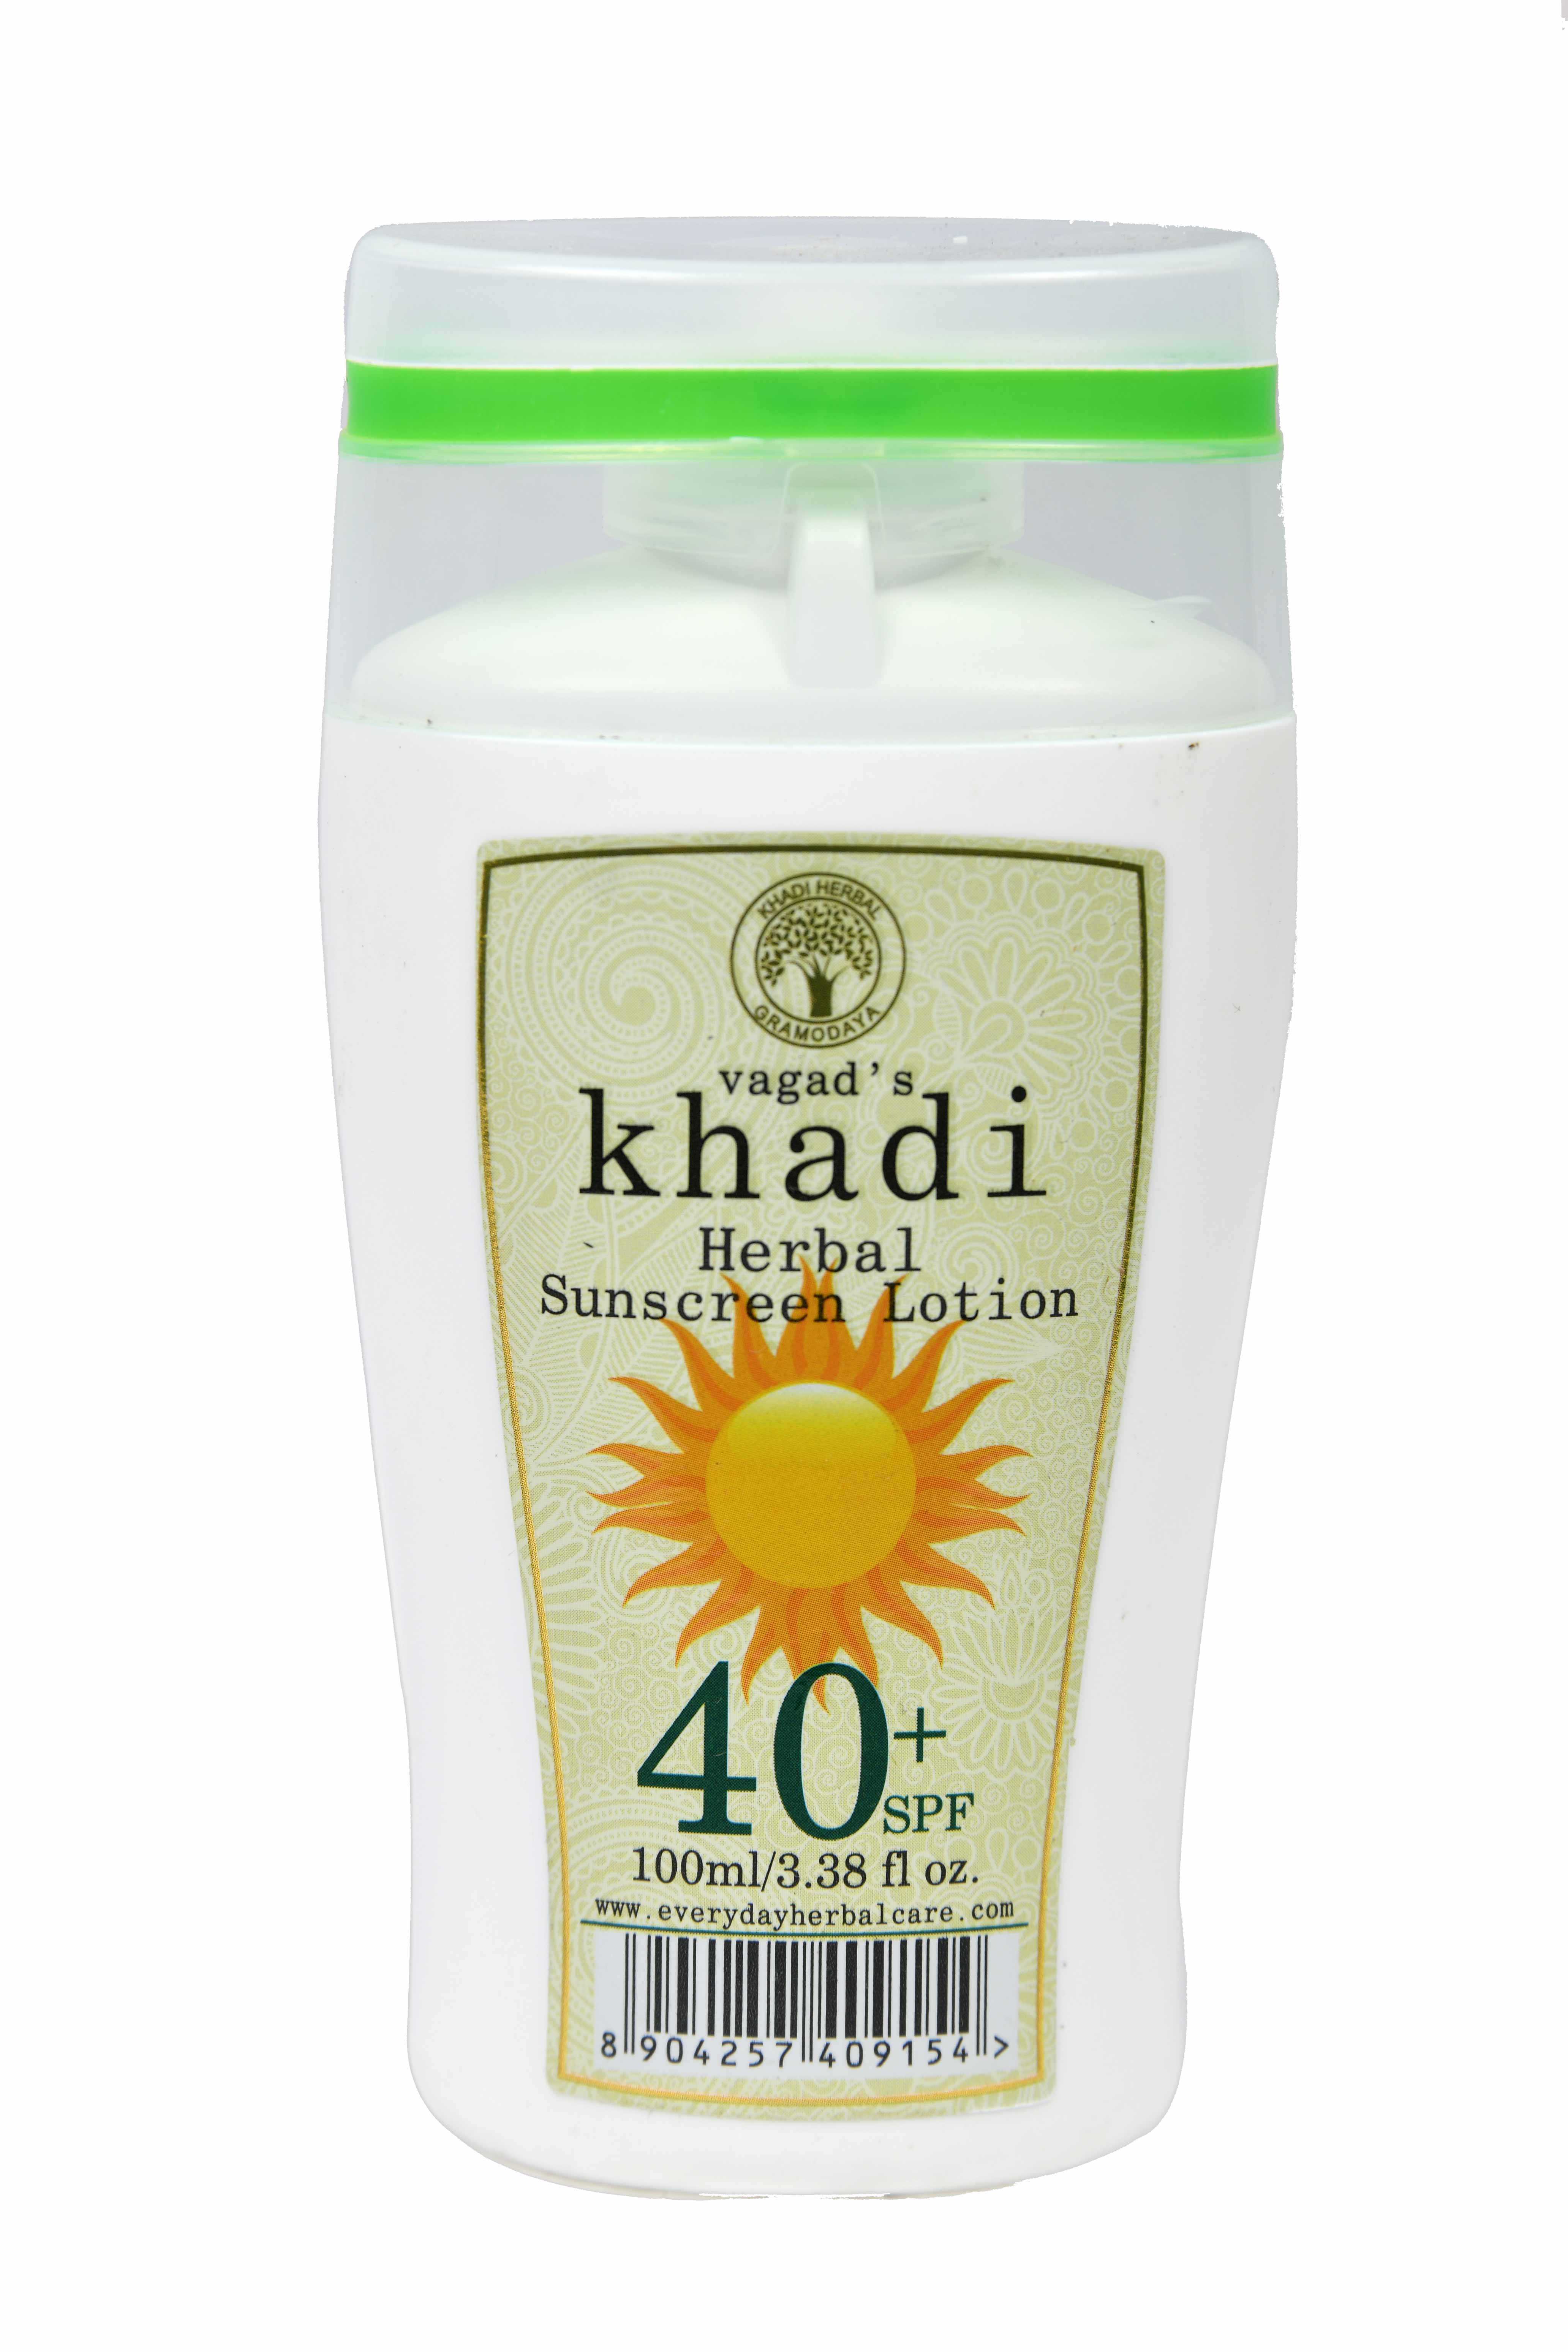 Buy Vagad's Khadi Spf 40 Sunscreen Lotion at Best Price Online